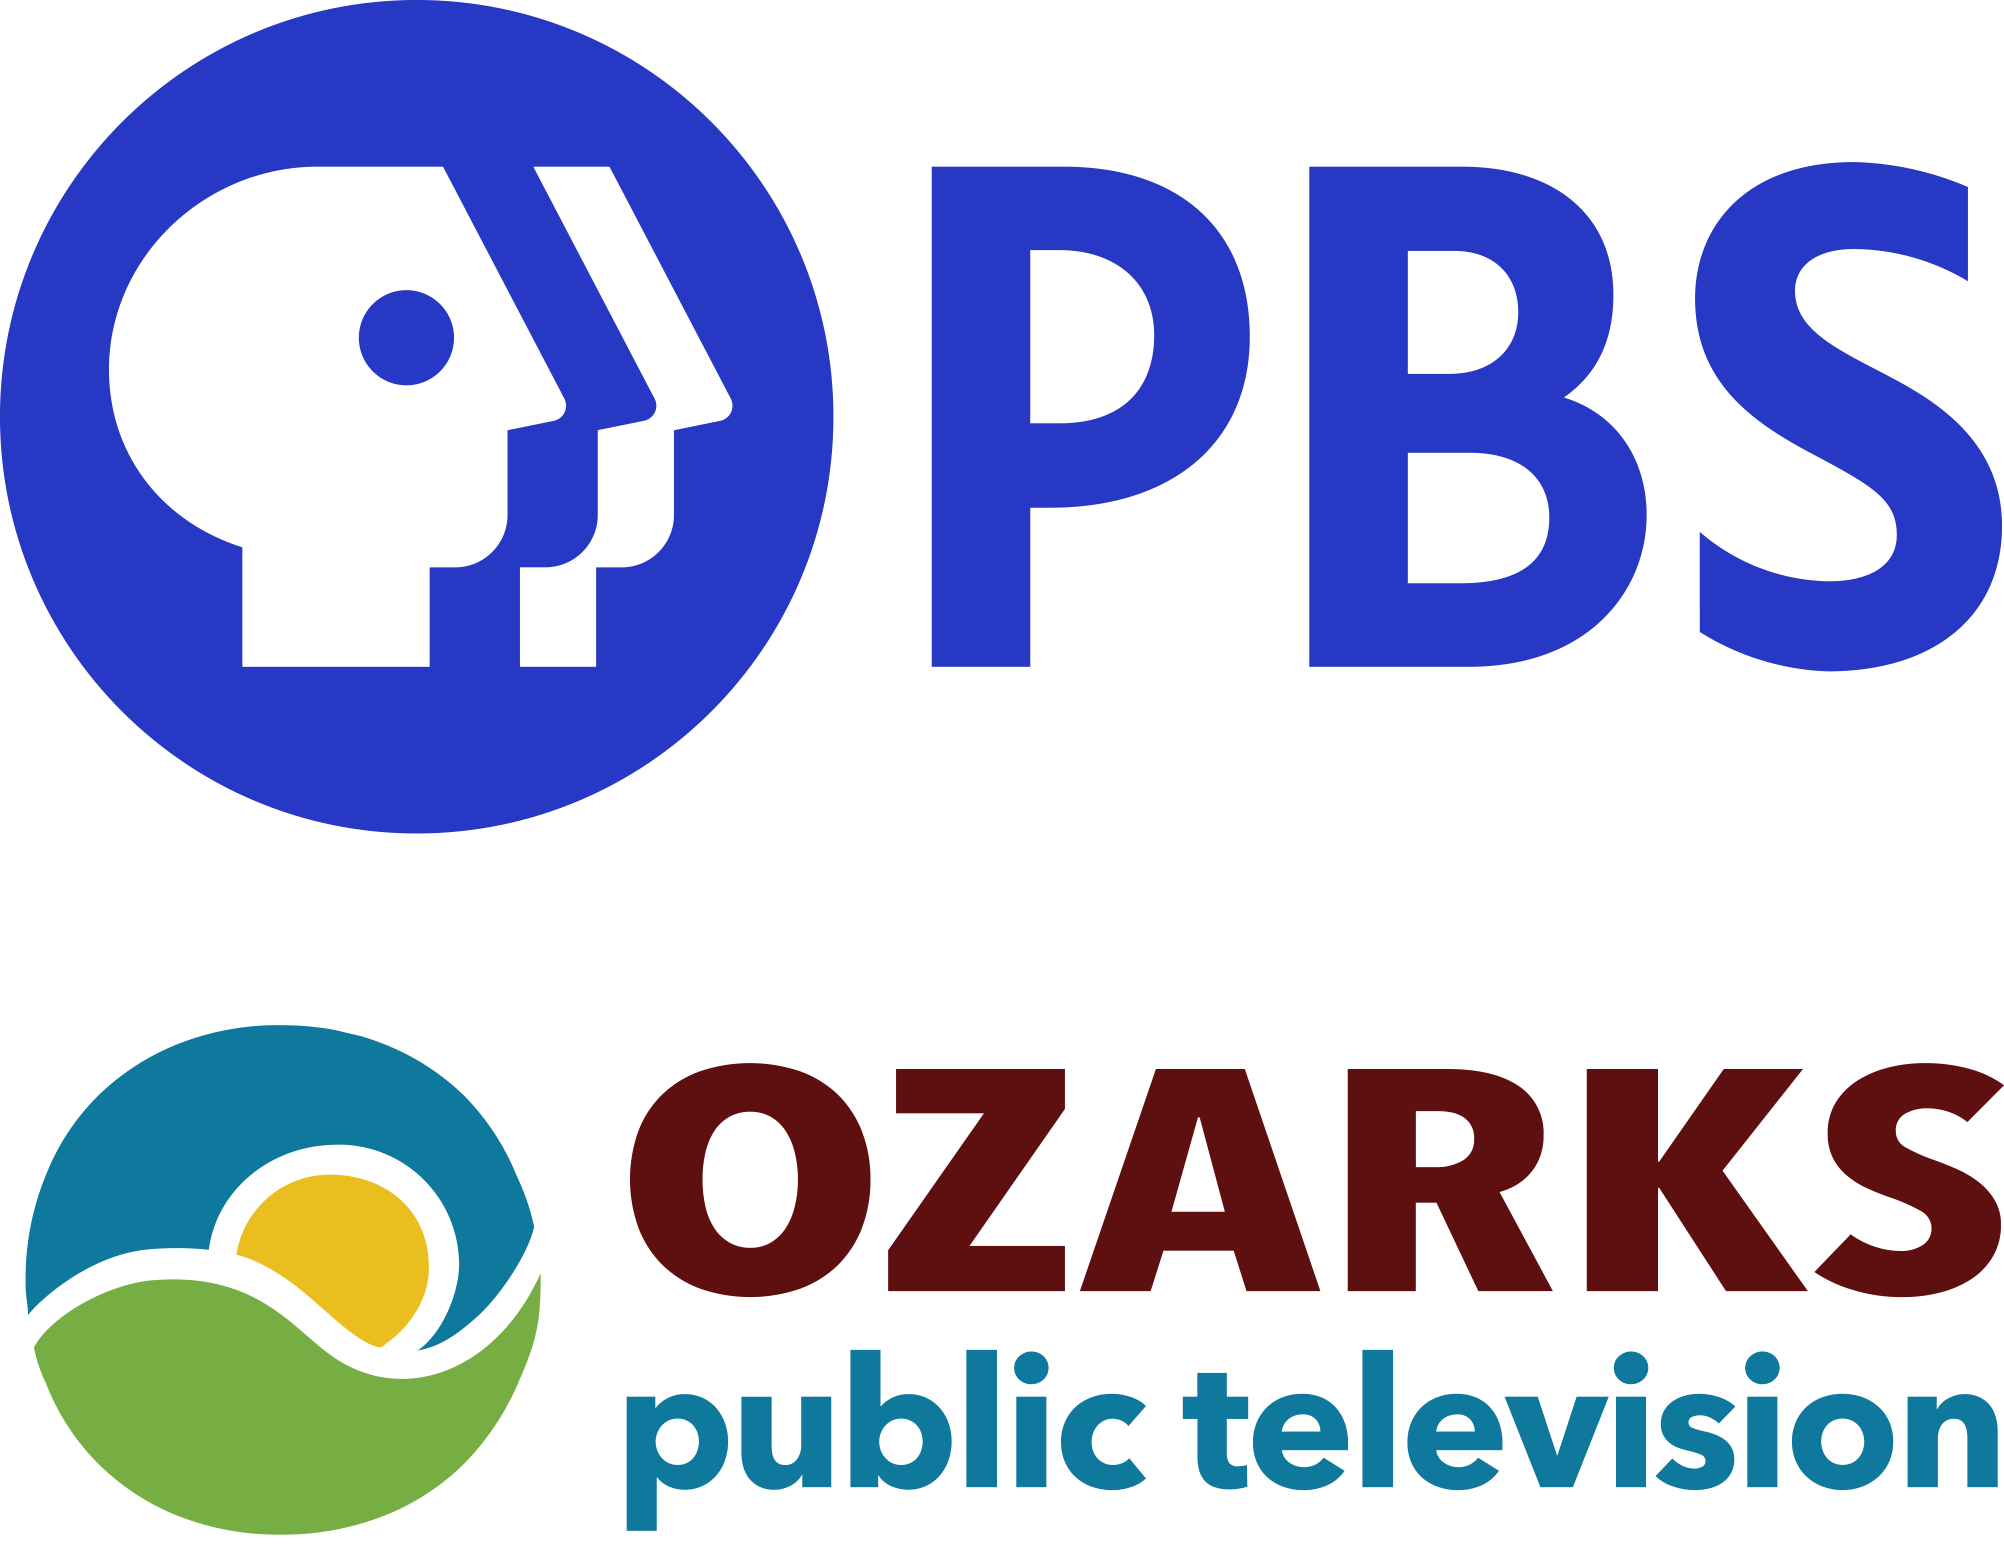 Ozarks Public Television